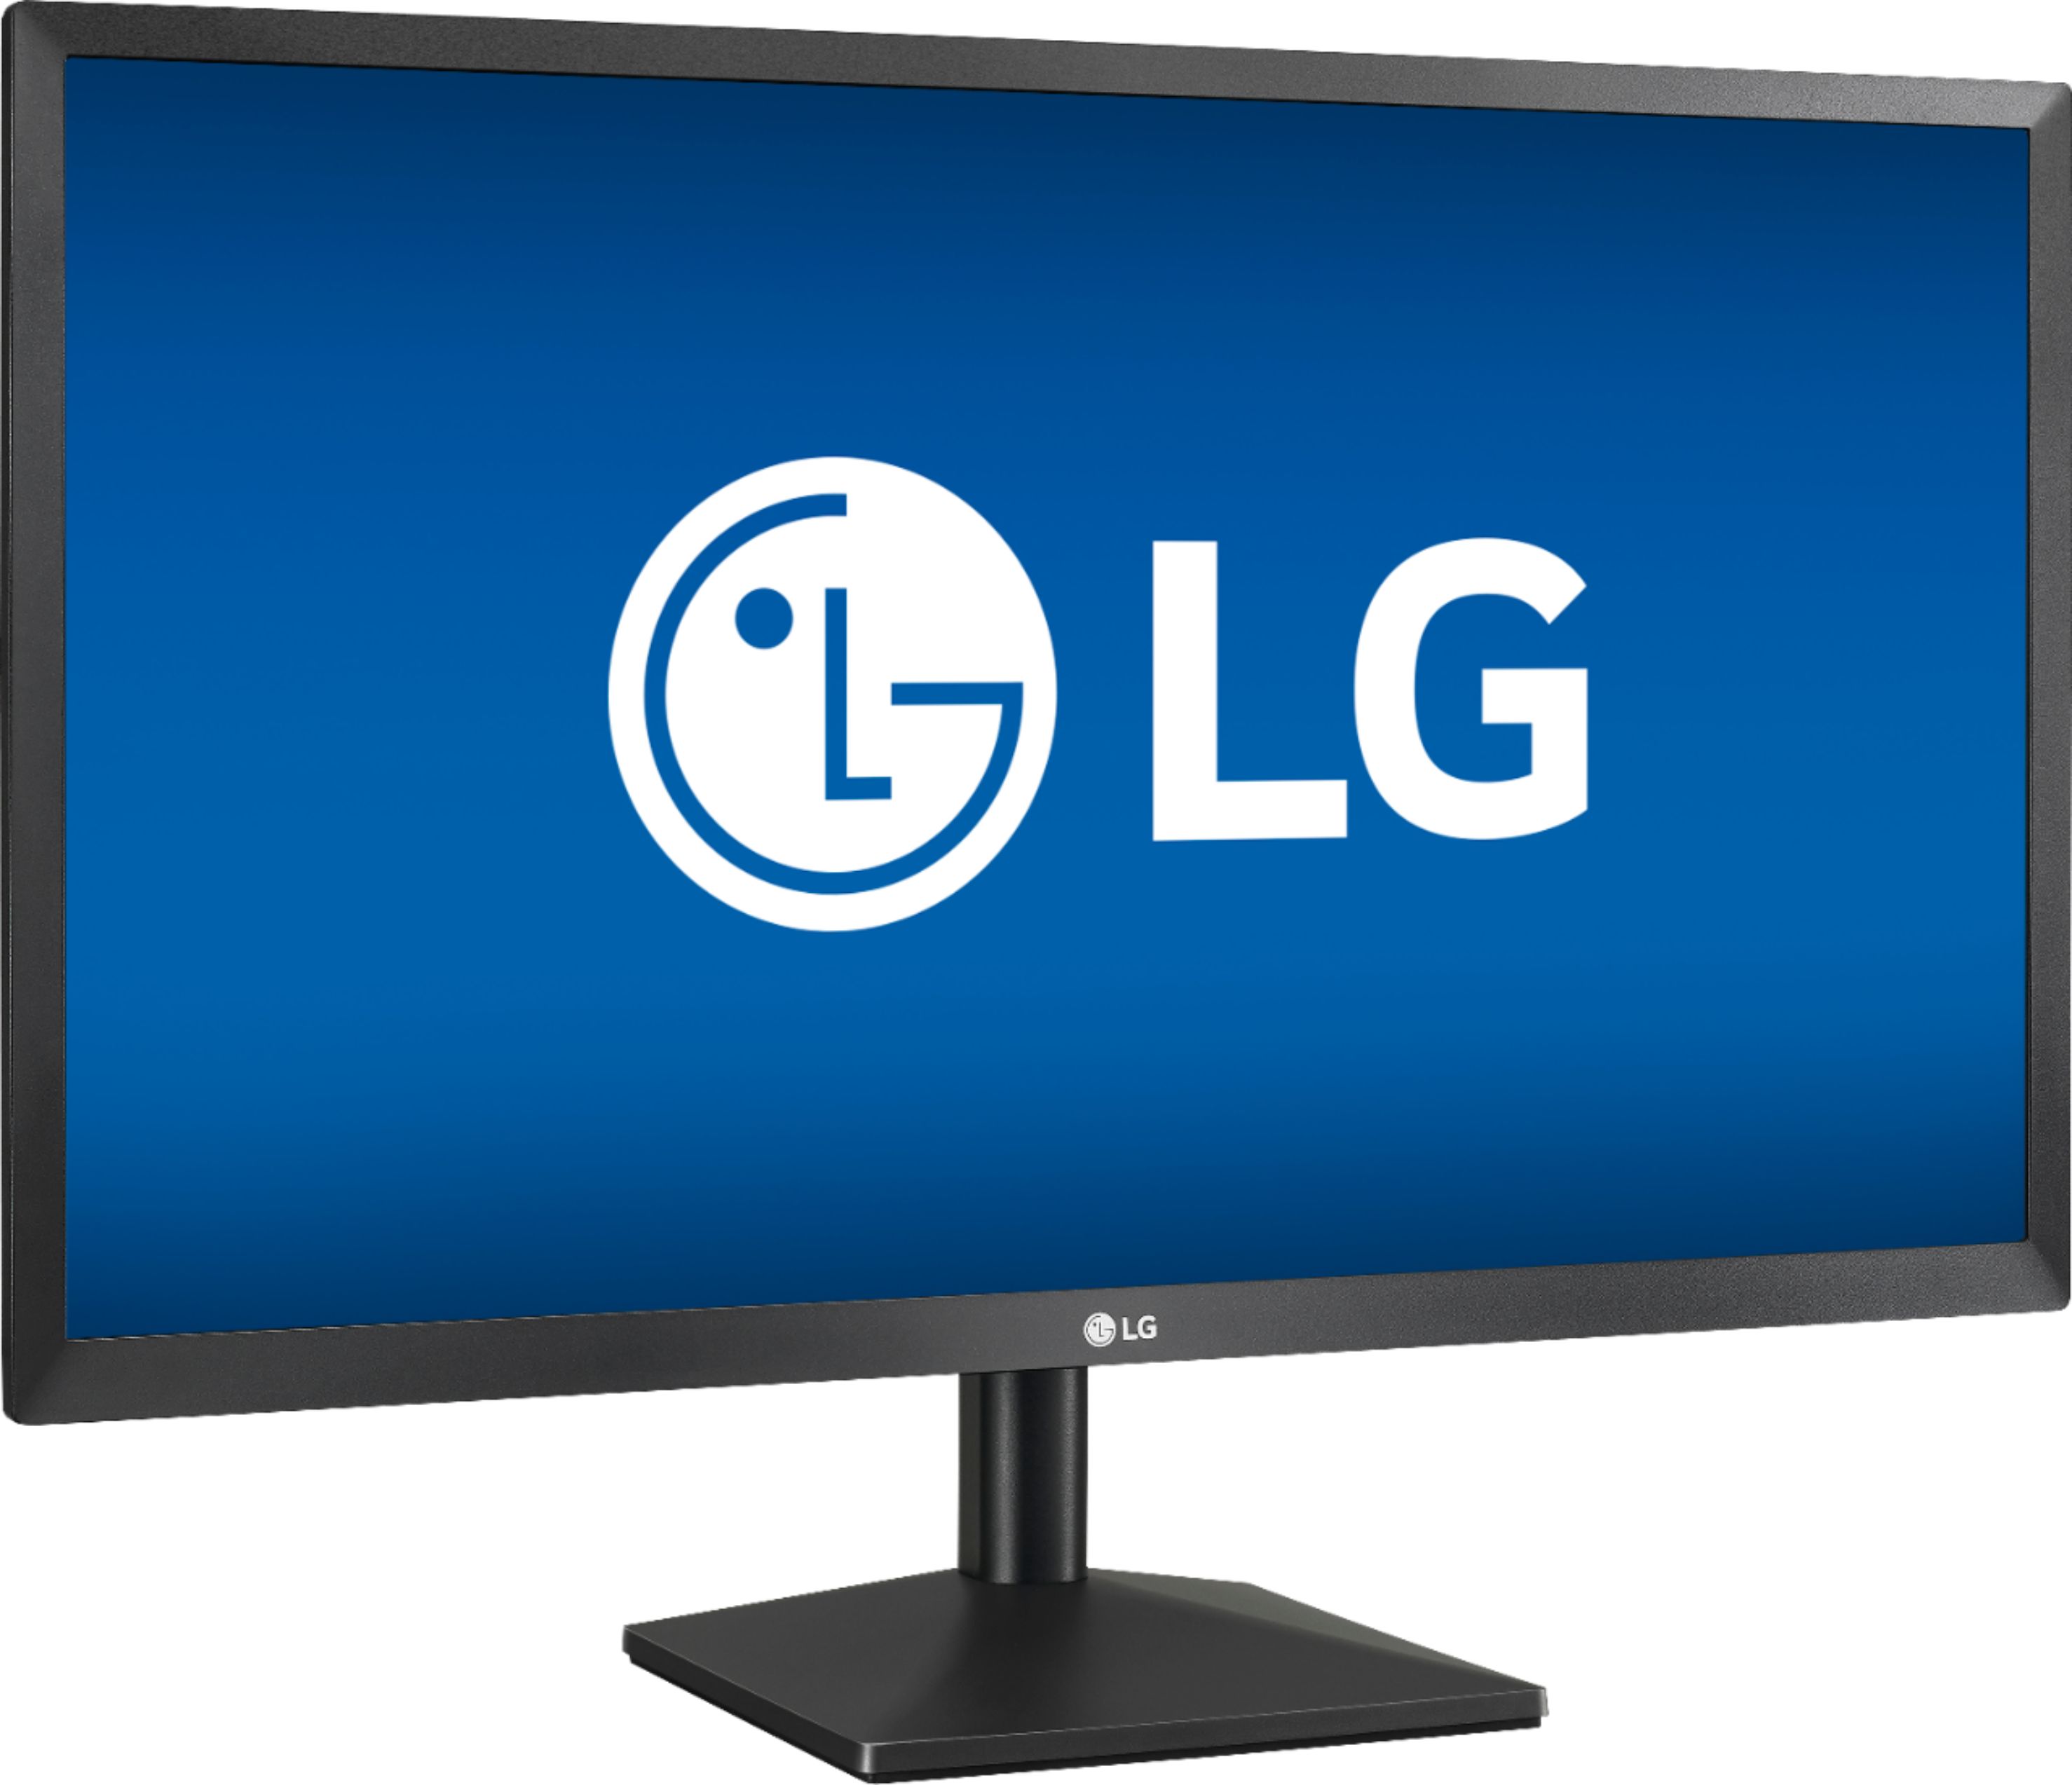 Angle View: LG - 24" IPS LED FHD FreeSync Monitor (HDMI, VGA) - Black